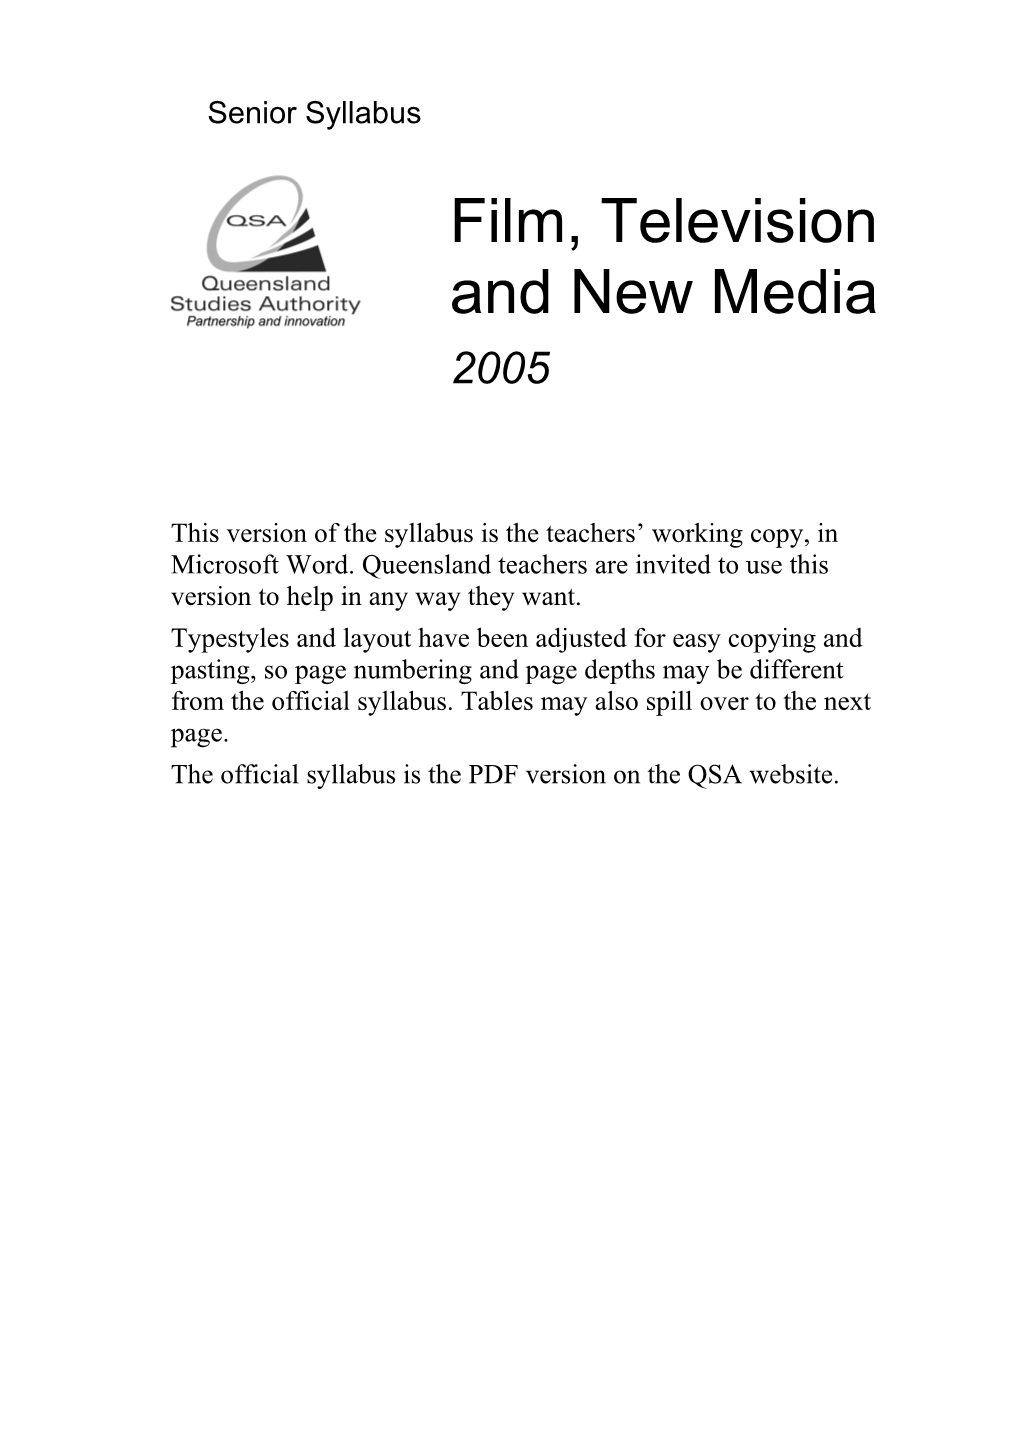 Film, Television and New Media (2005) Senior Syllabus